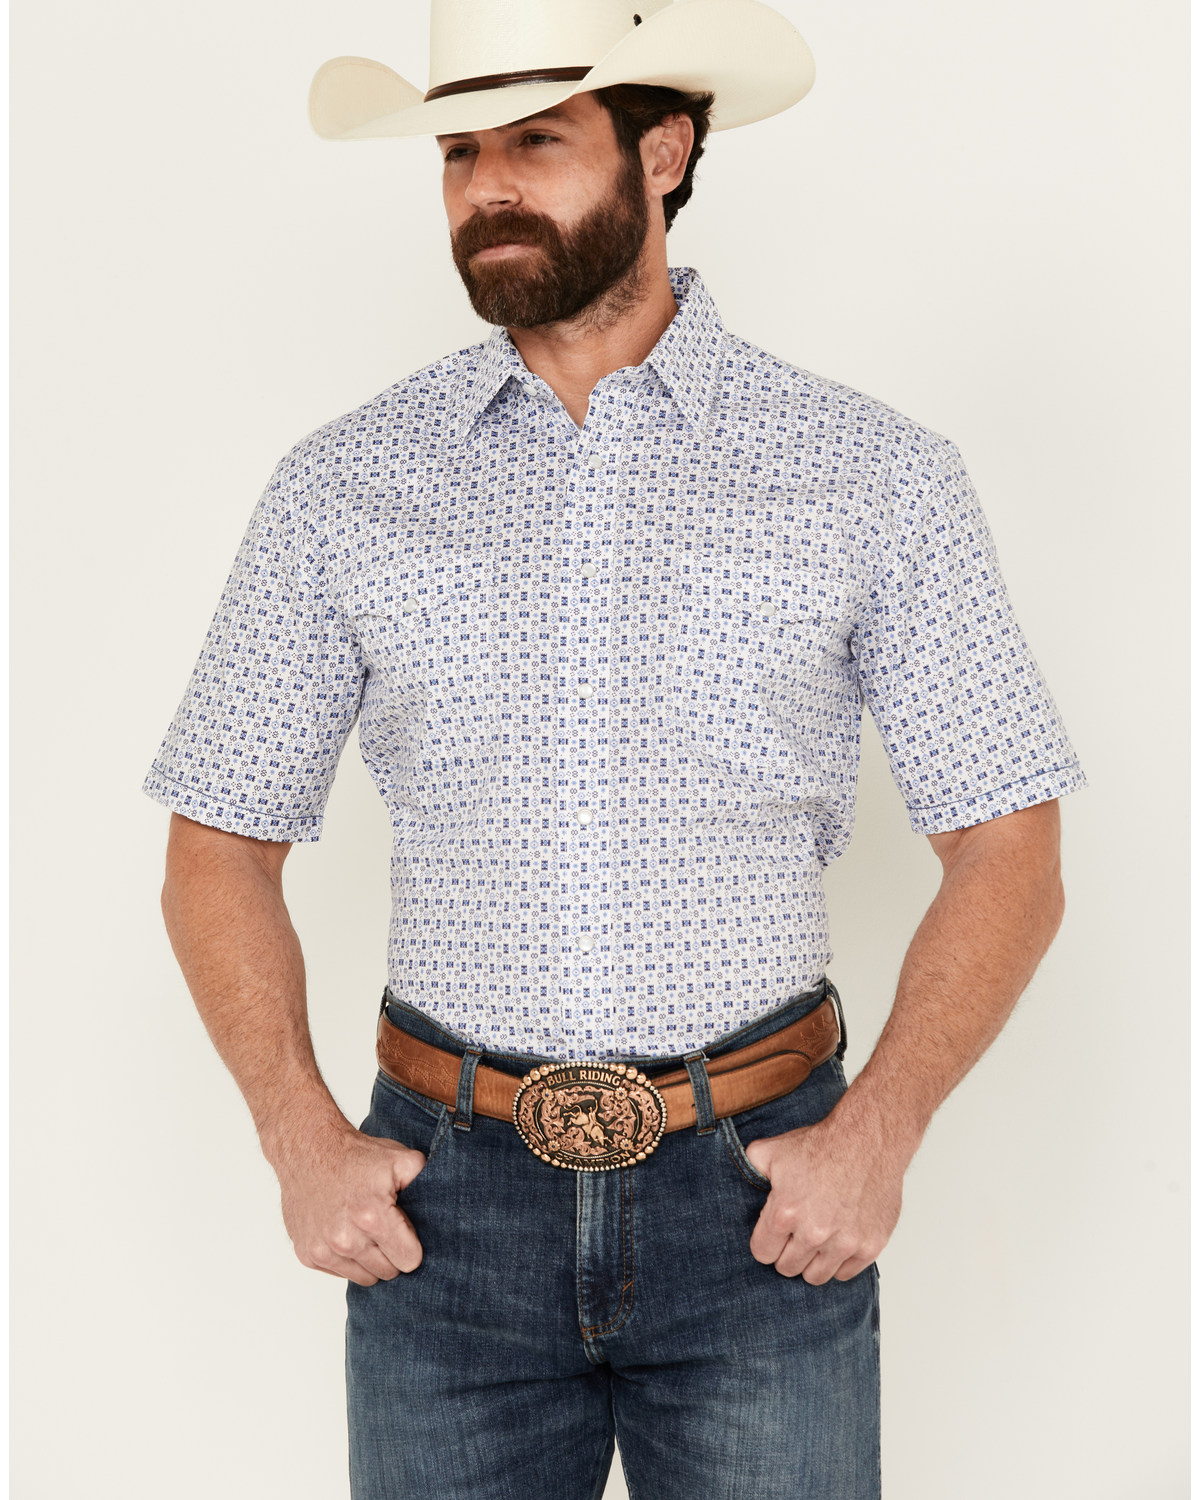 Panhandle Men's Southwestern Print Short Sleeve Pearl Snap Stretch Western Shirt